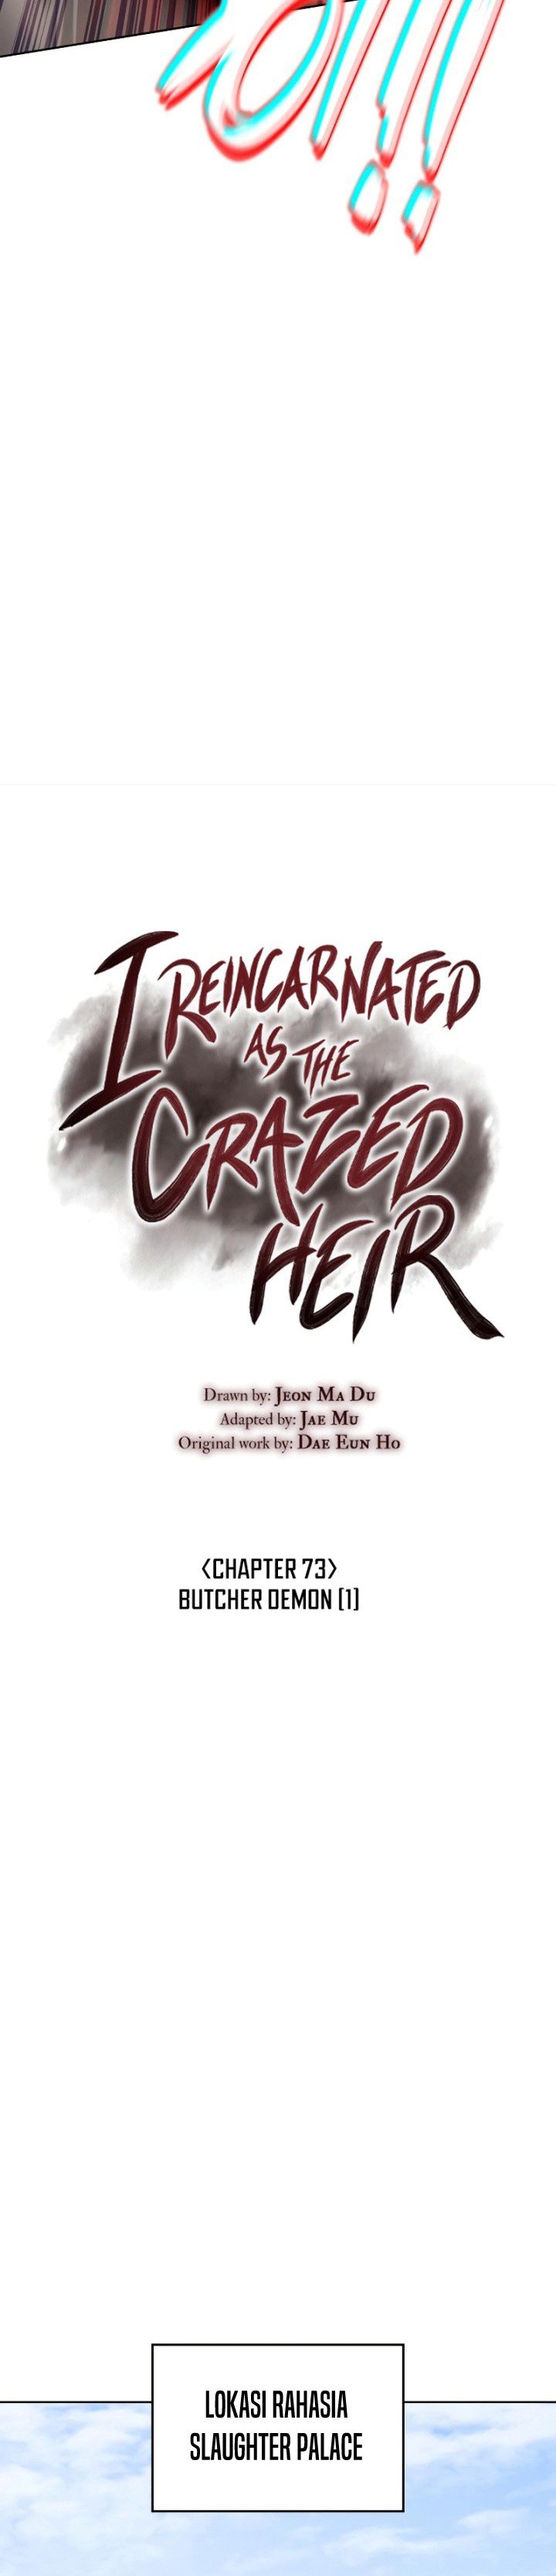 I Reincarnated As The Crazed Heir Chapter 73 - 419